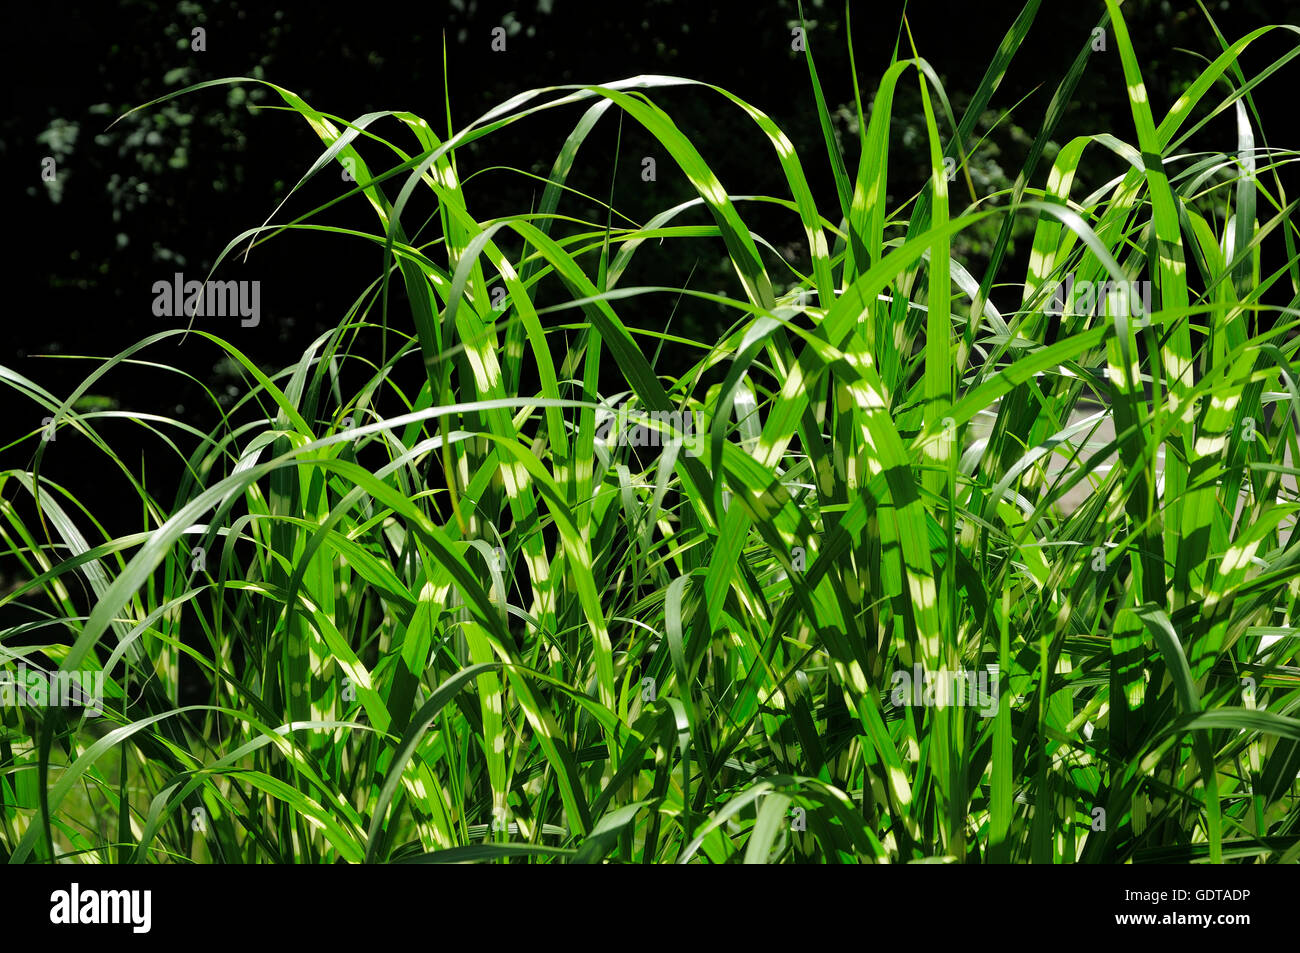 Zebra striped grass Stock Photo